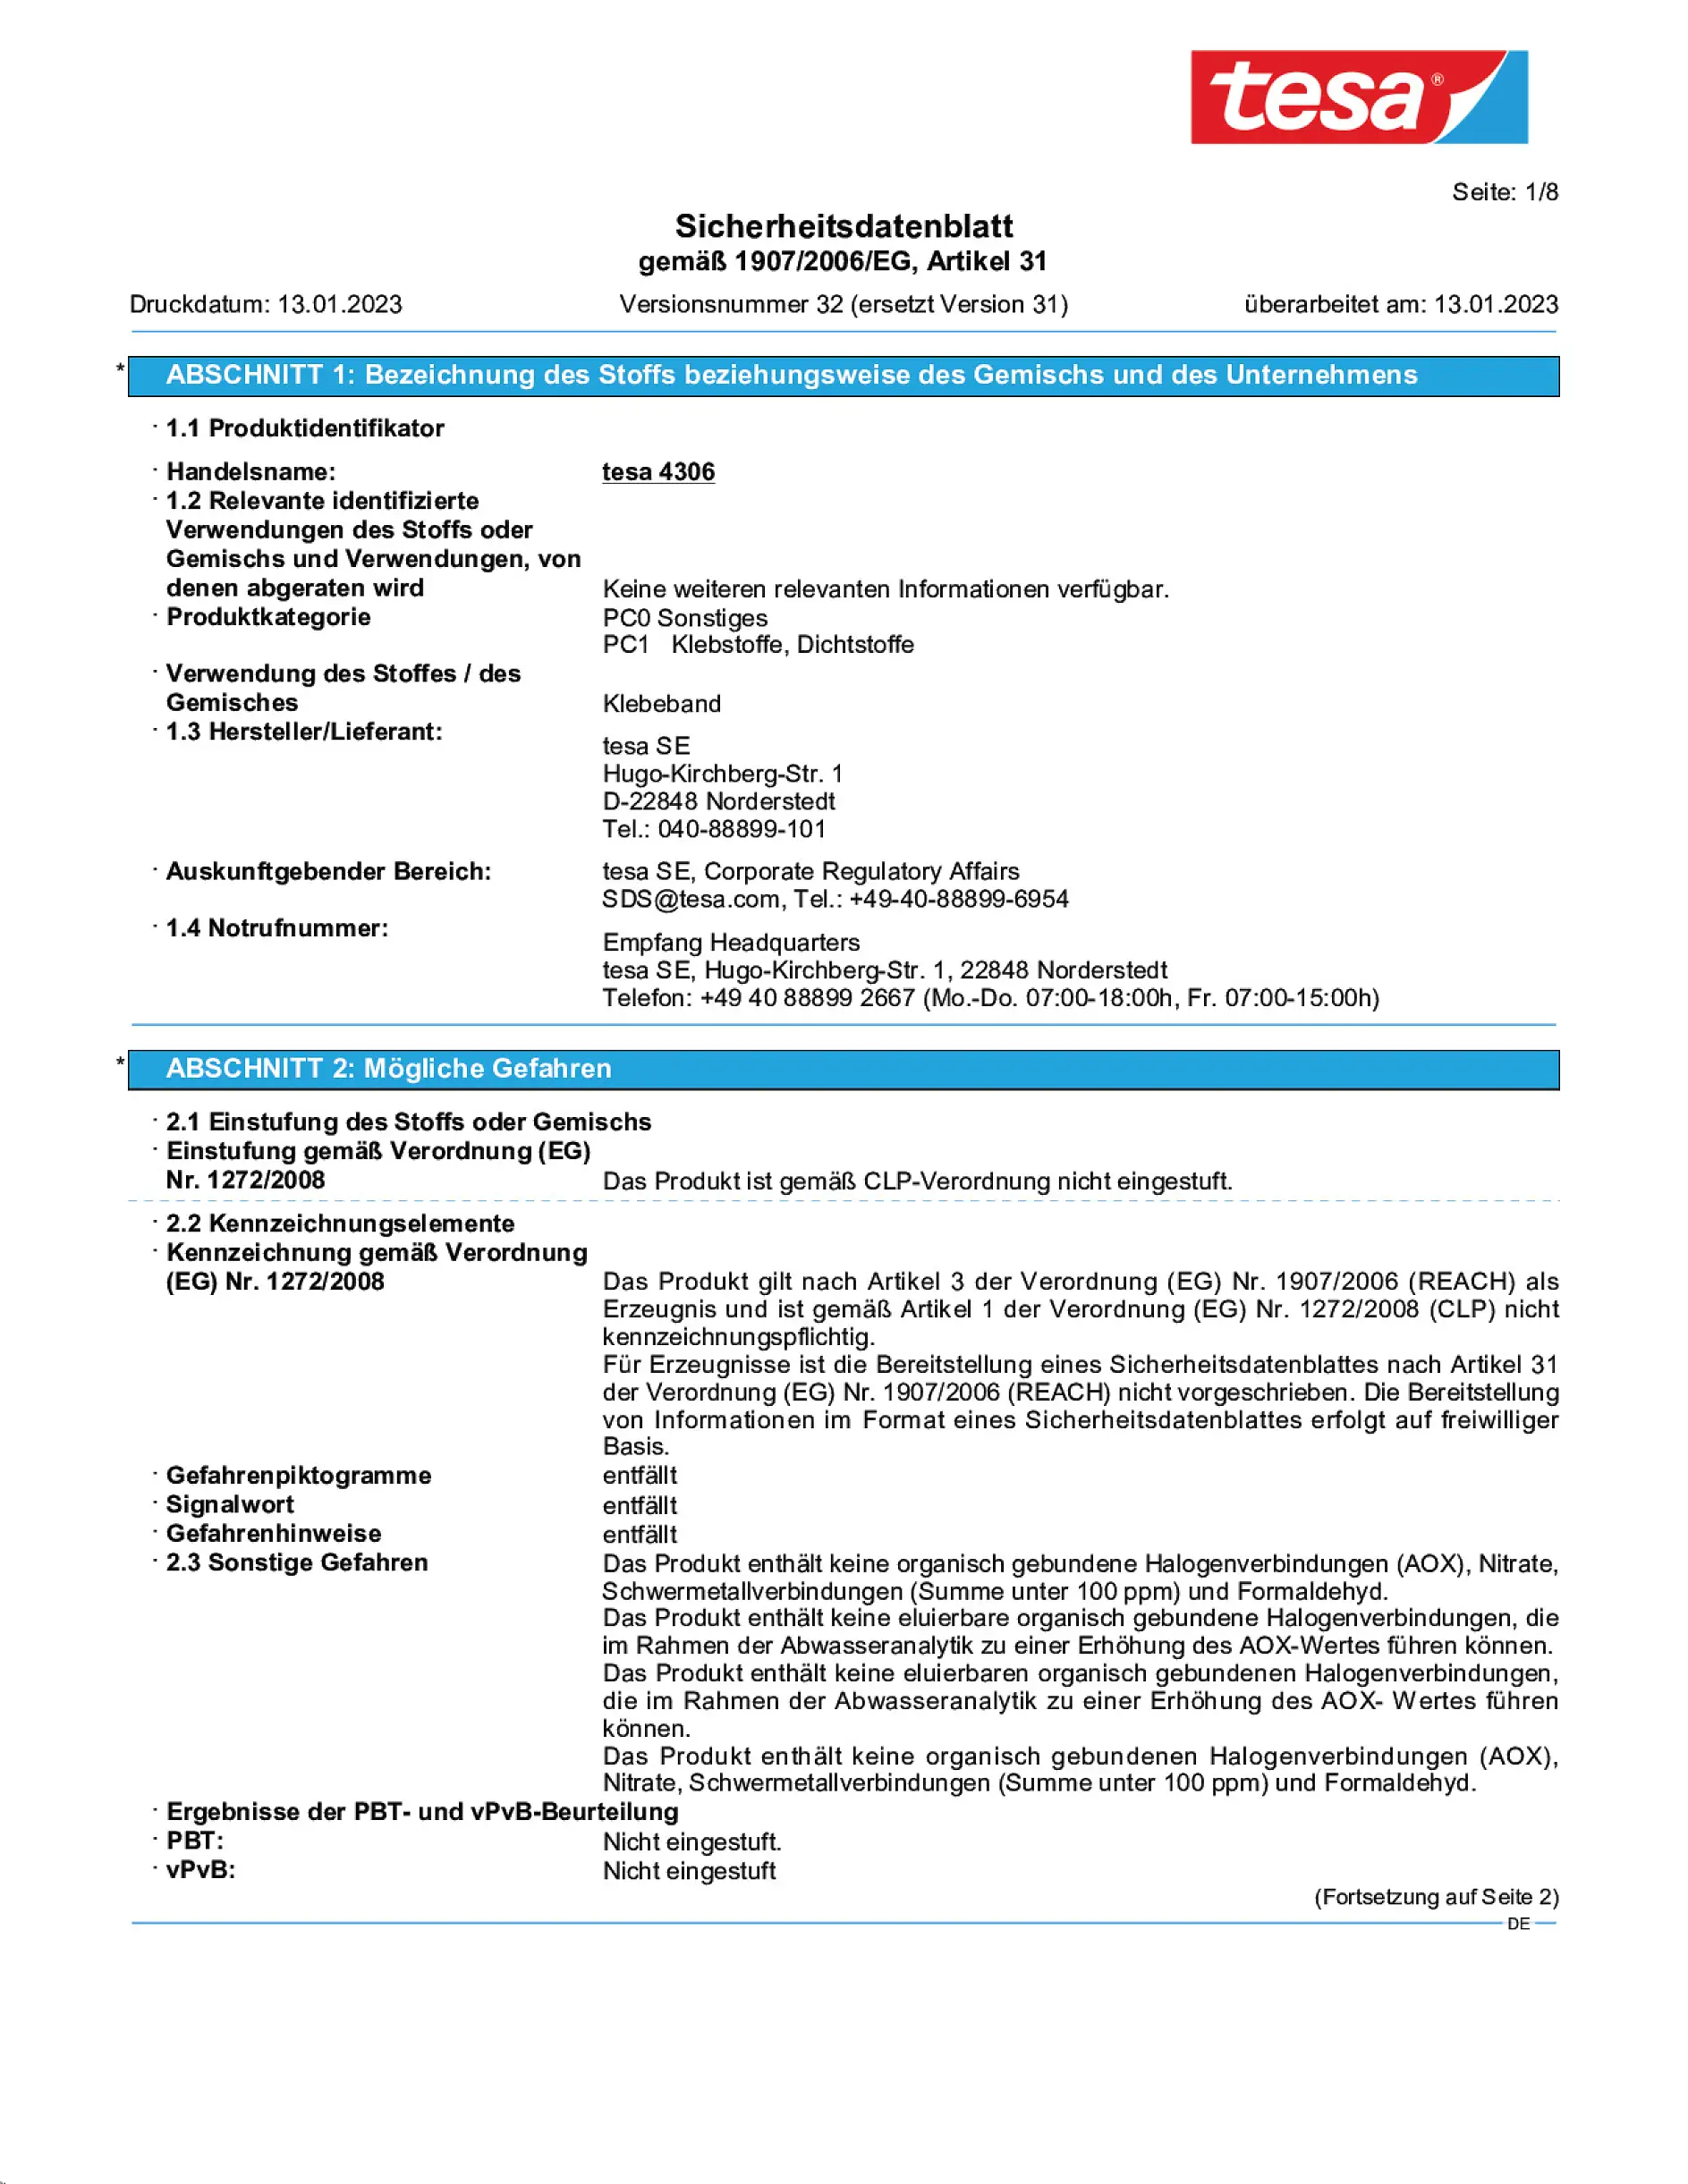 Safety data sheet_tesa® Professional 04306_de-DE_v32